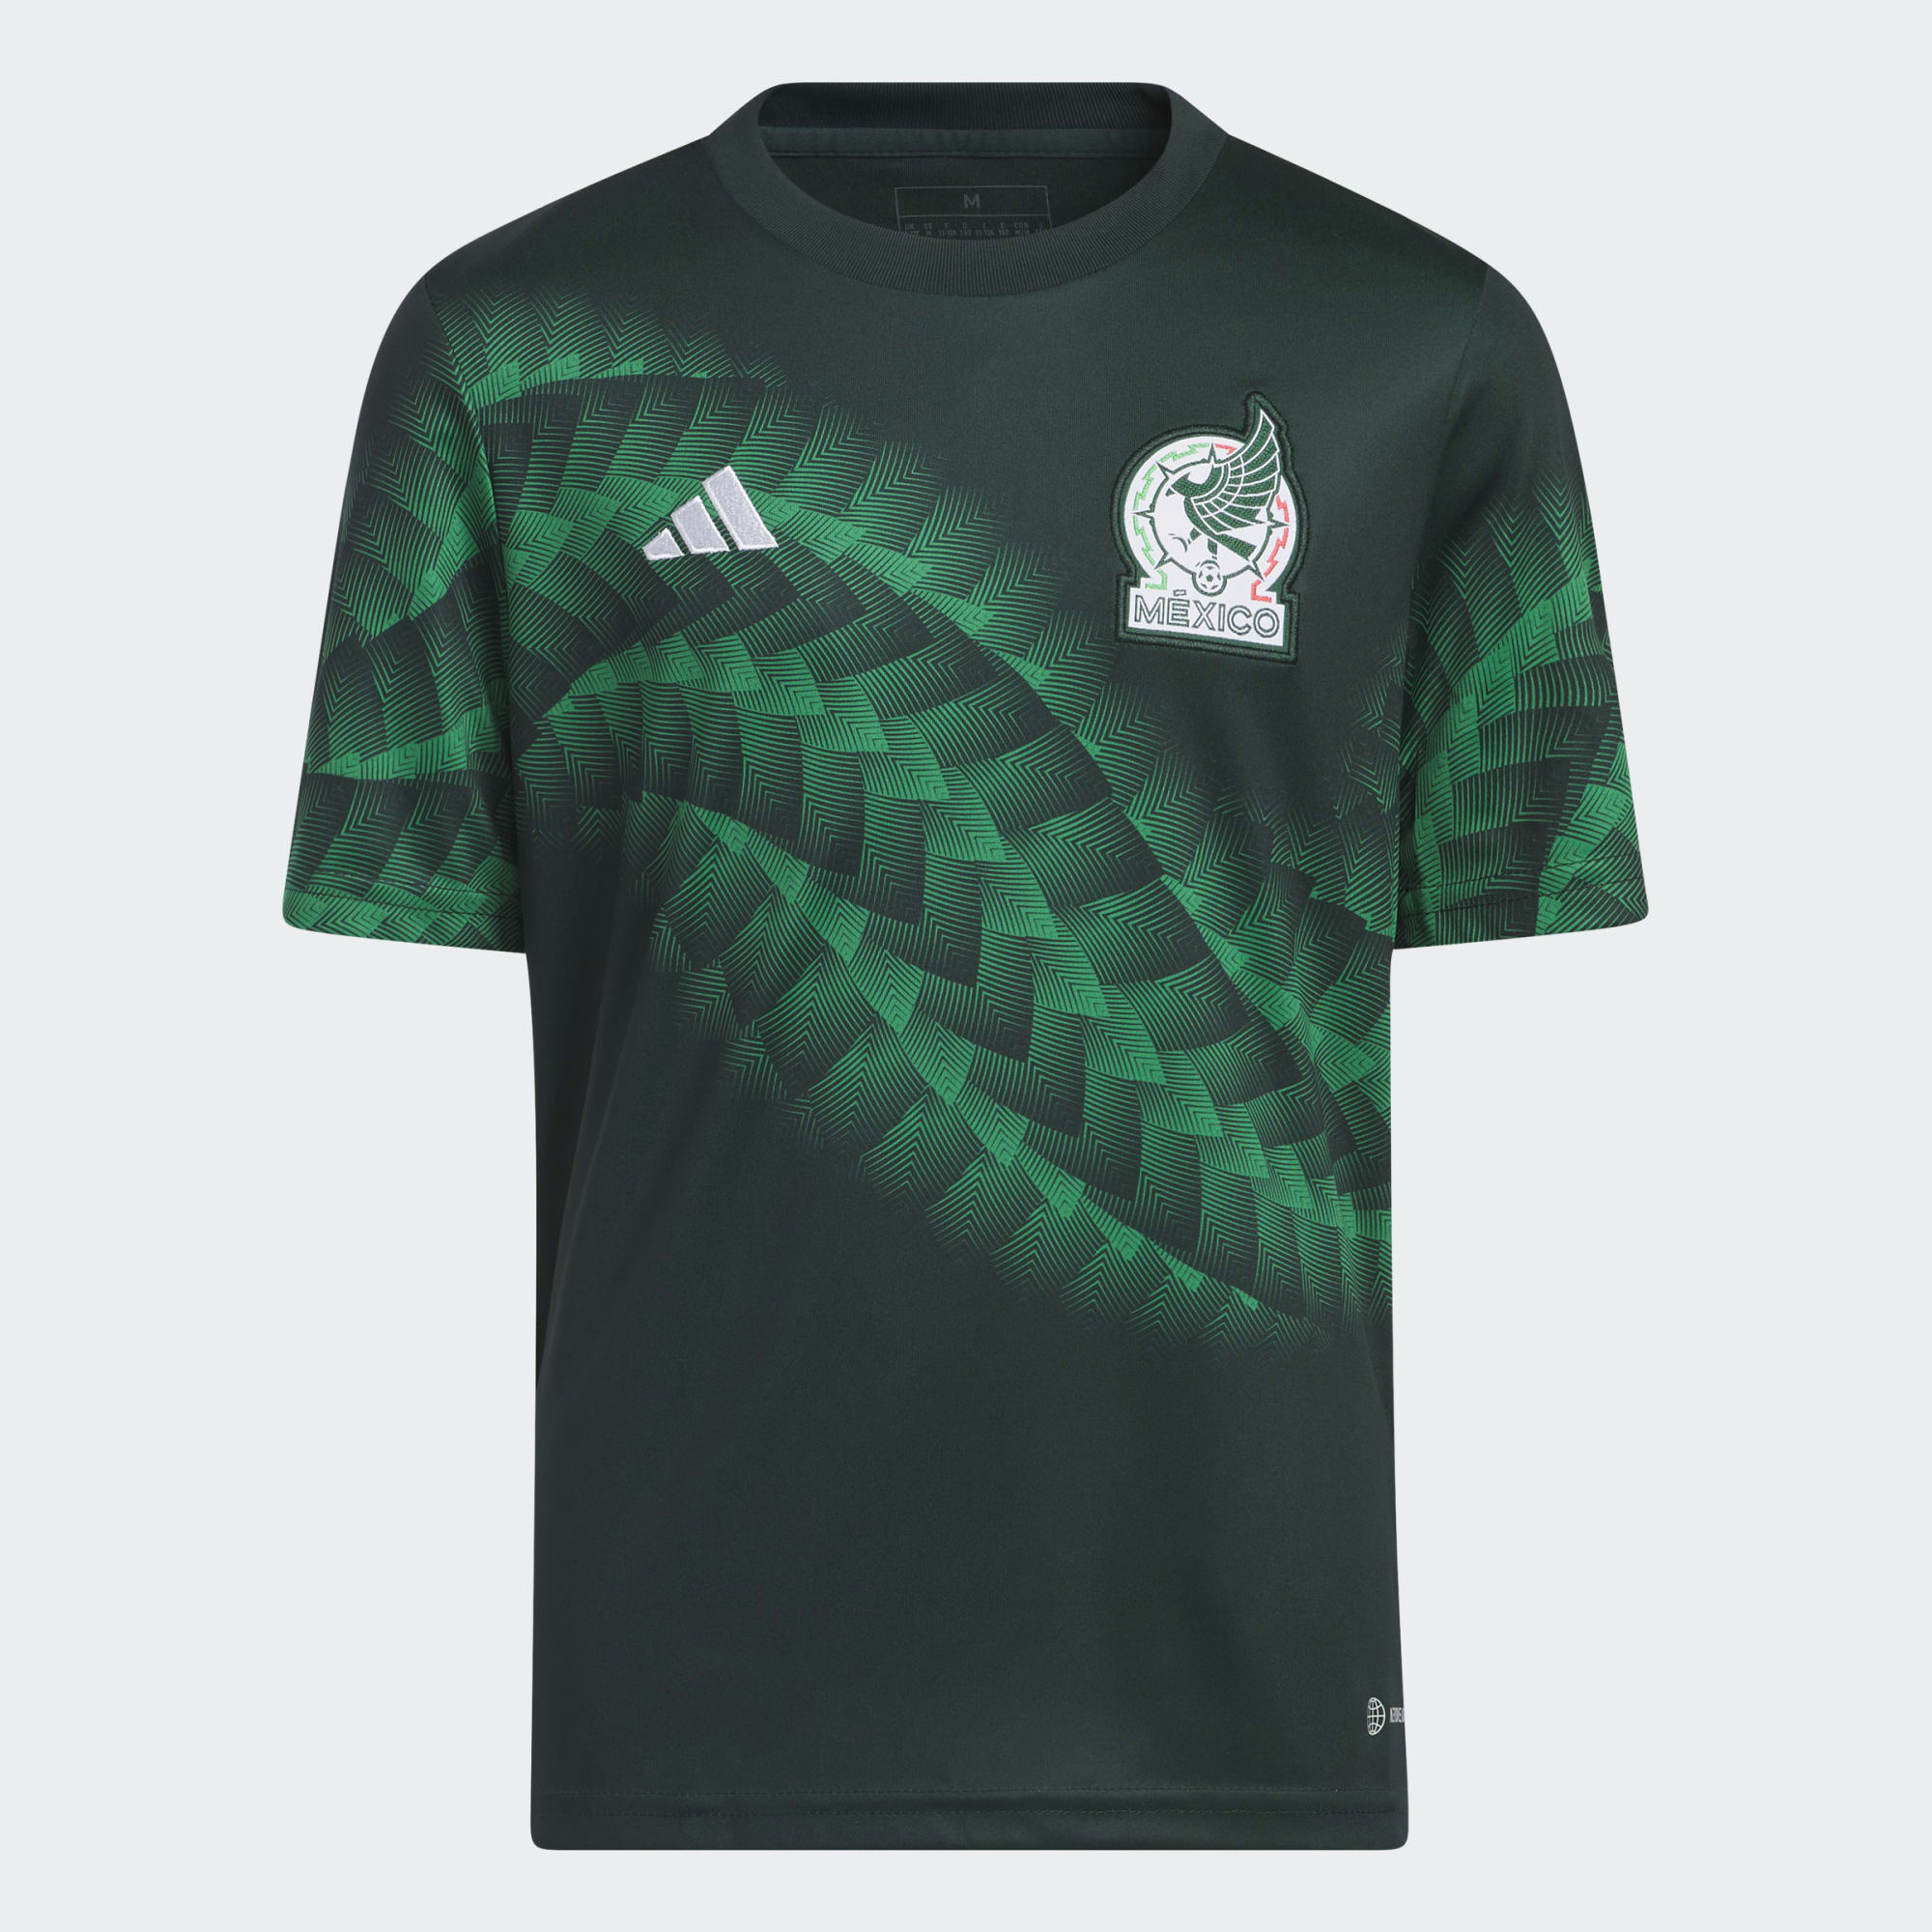 mexico soccer team gear